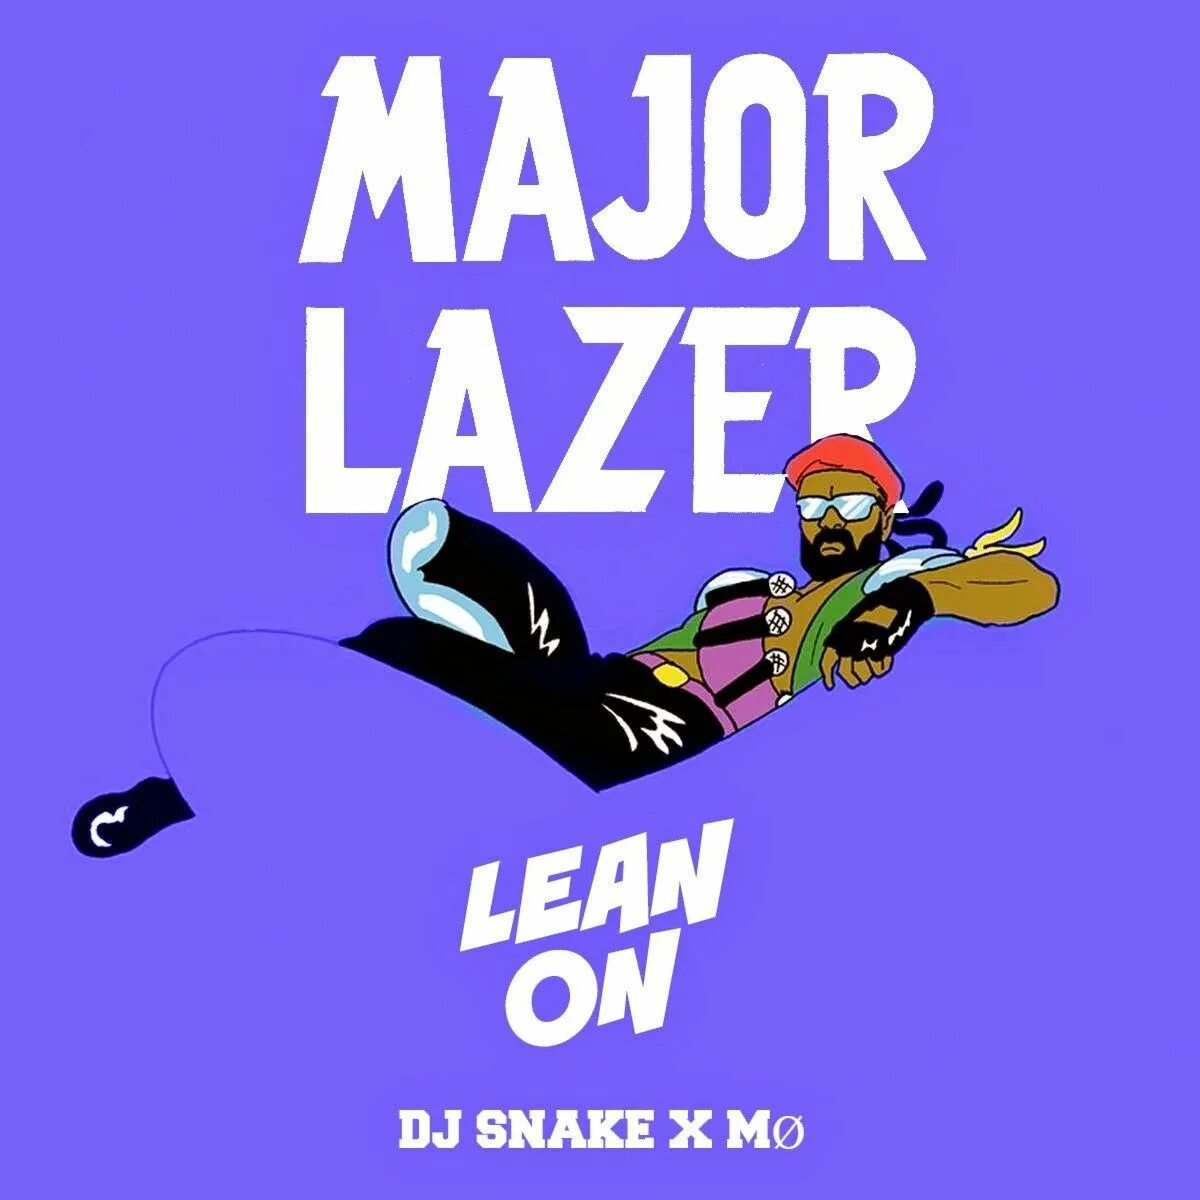 Major lazer snake lean. Major Lazer обложка. Major Lazer, DJ Snake, MØ. Leon on Major Lazer. Major Lazer Lean on обложка.